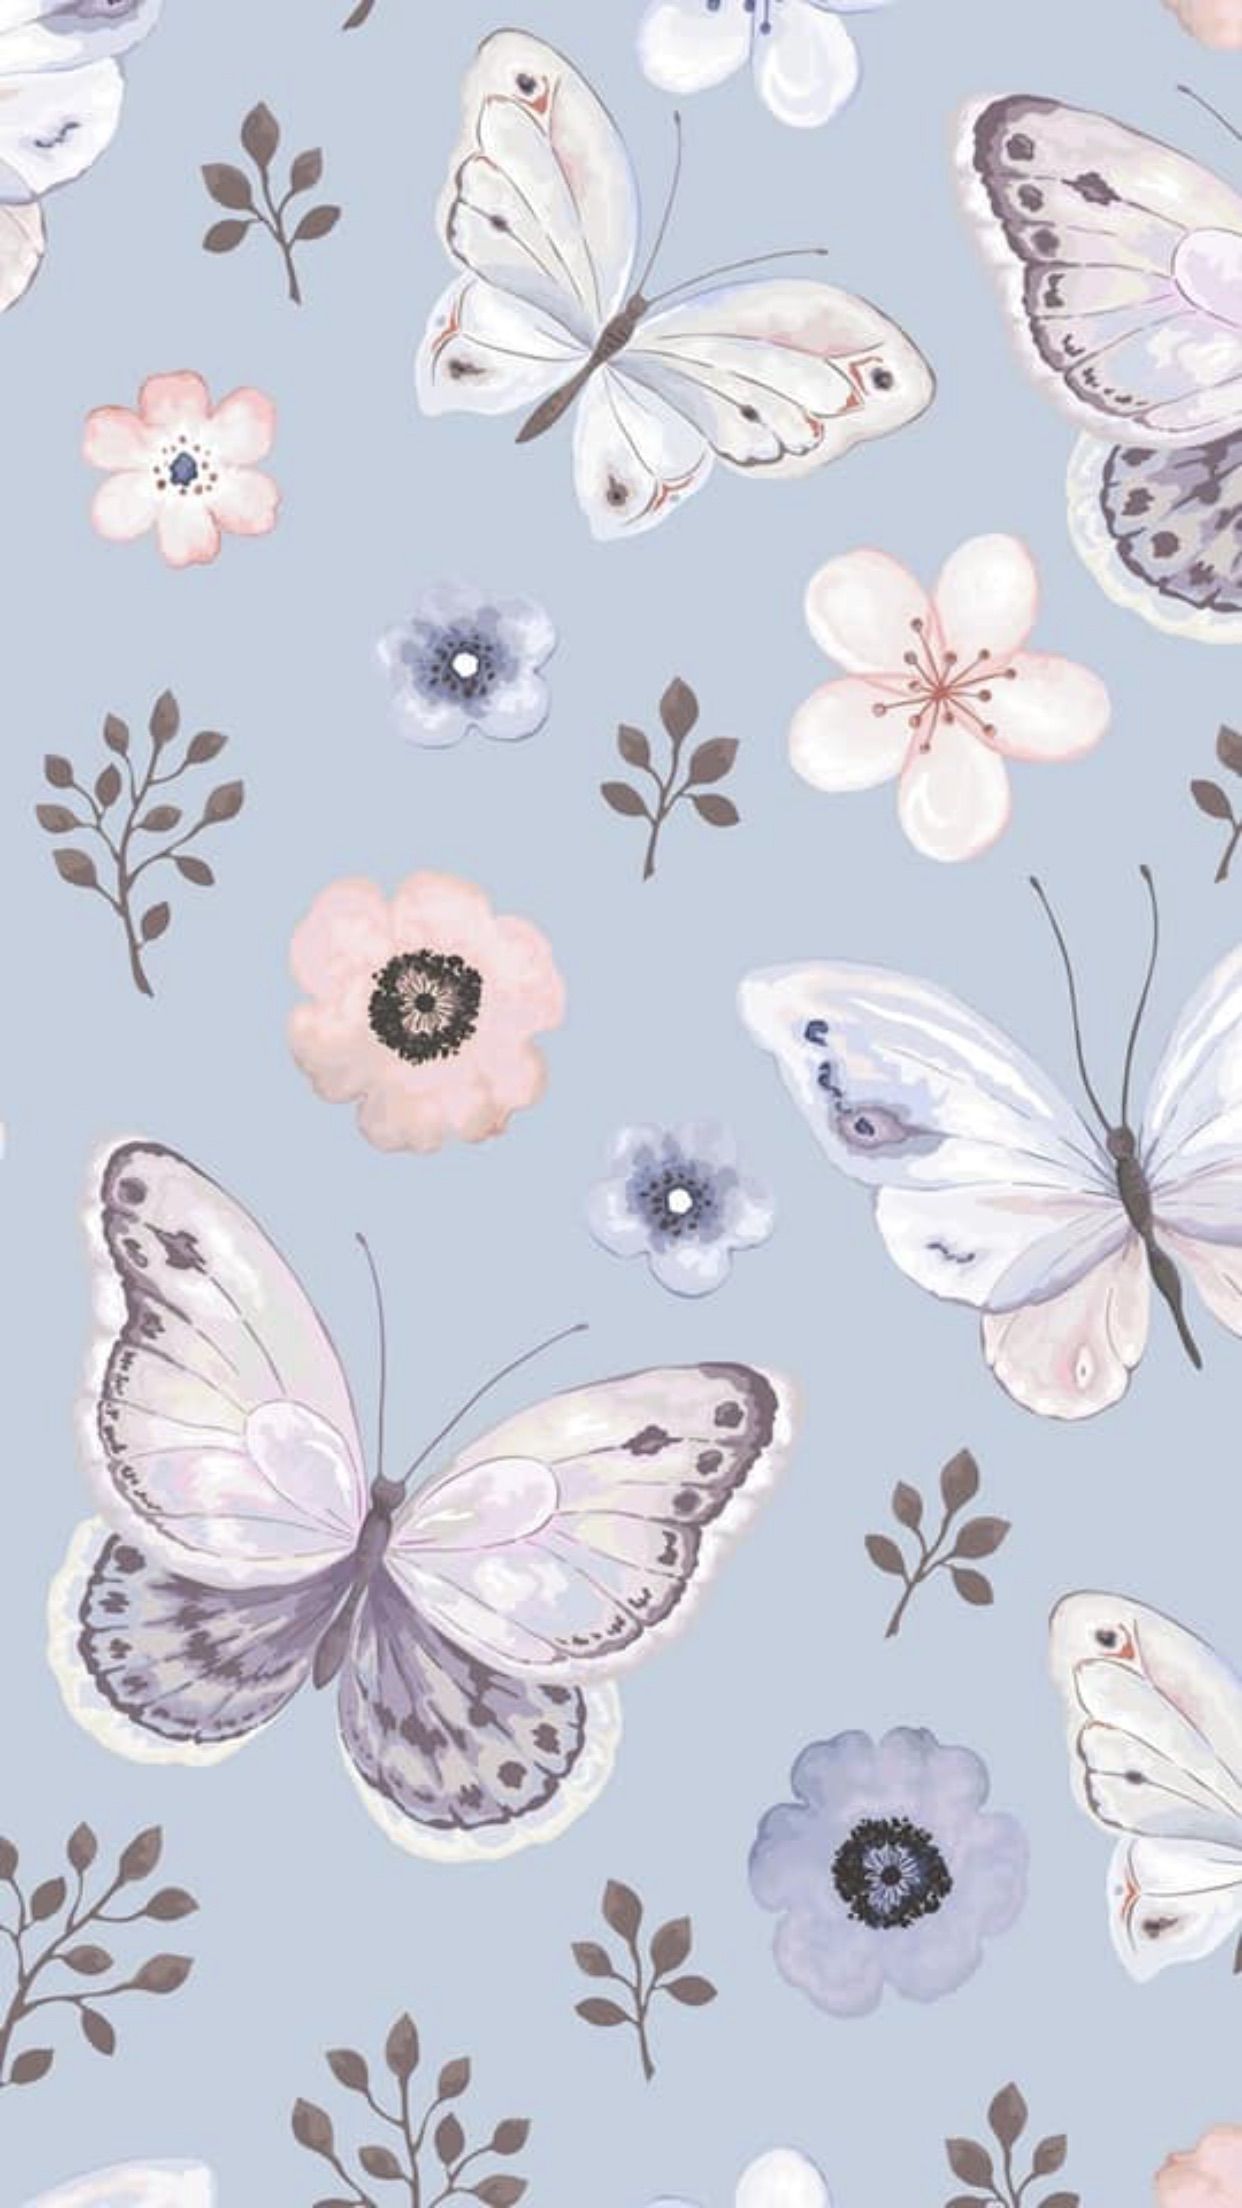 Pastel Butterfly Wallpaper Iphone 1242x28 Wallpaper Teahub Io